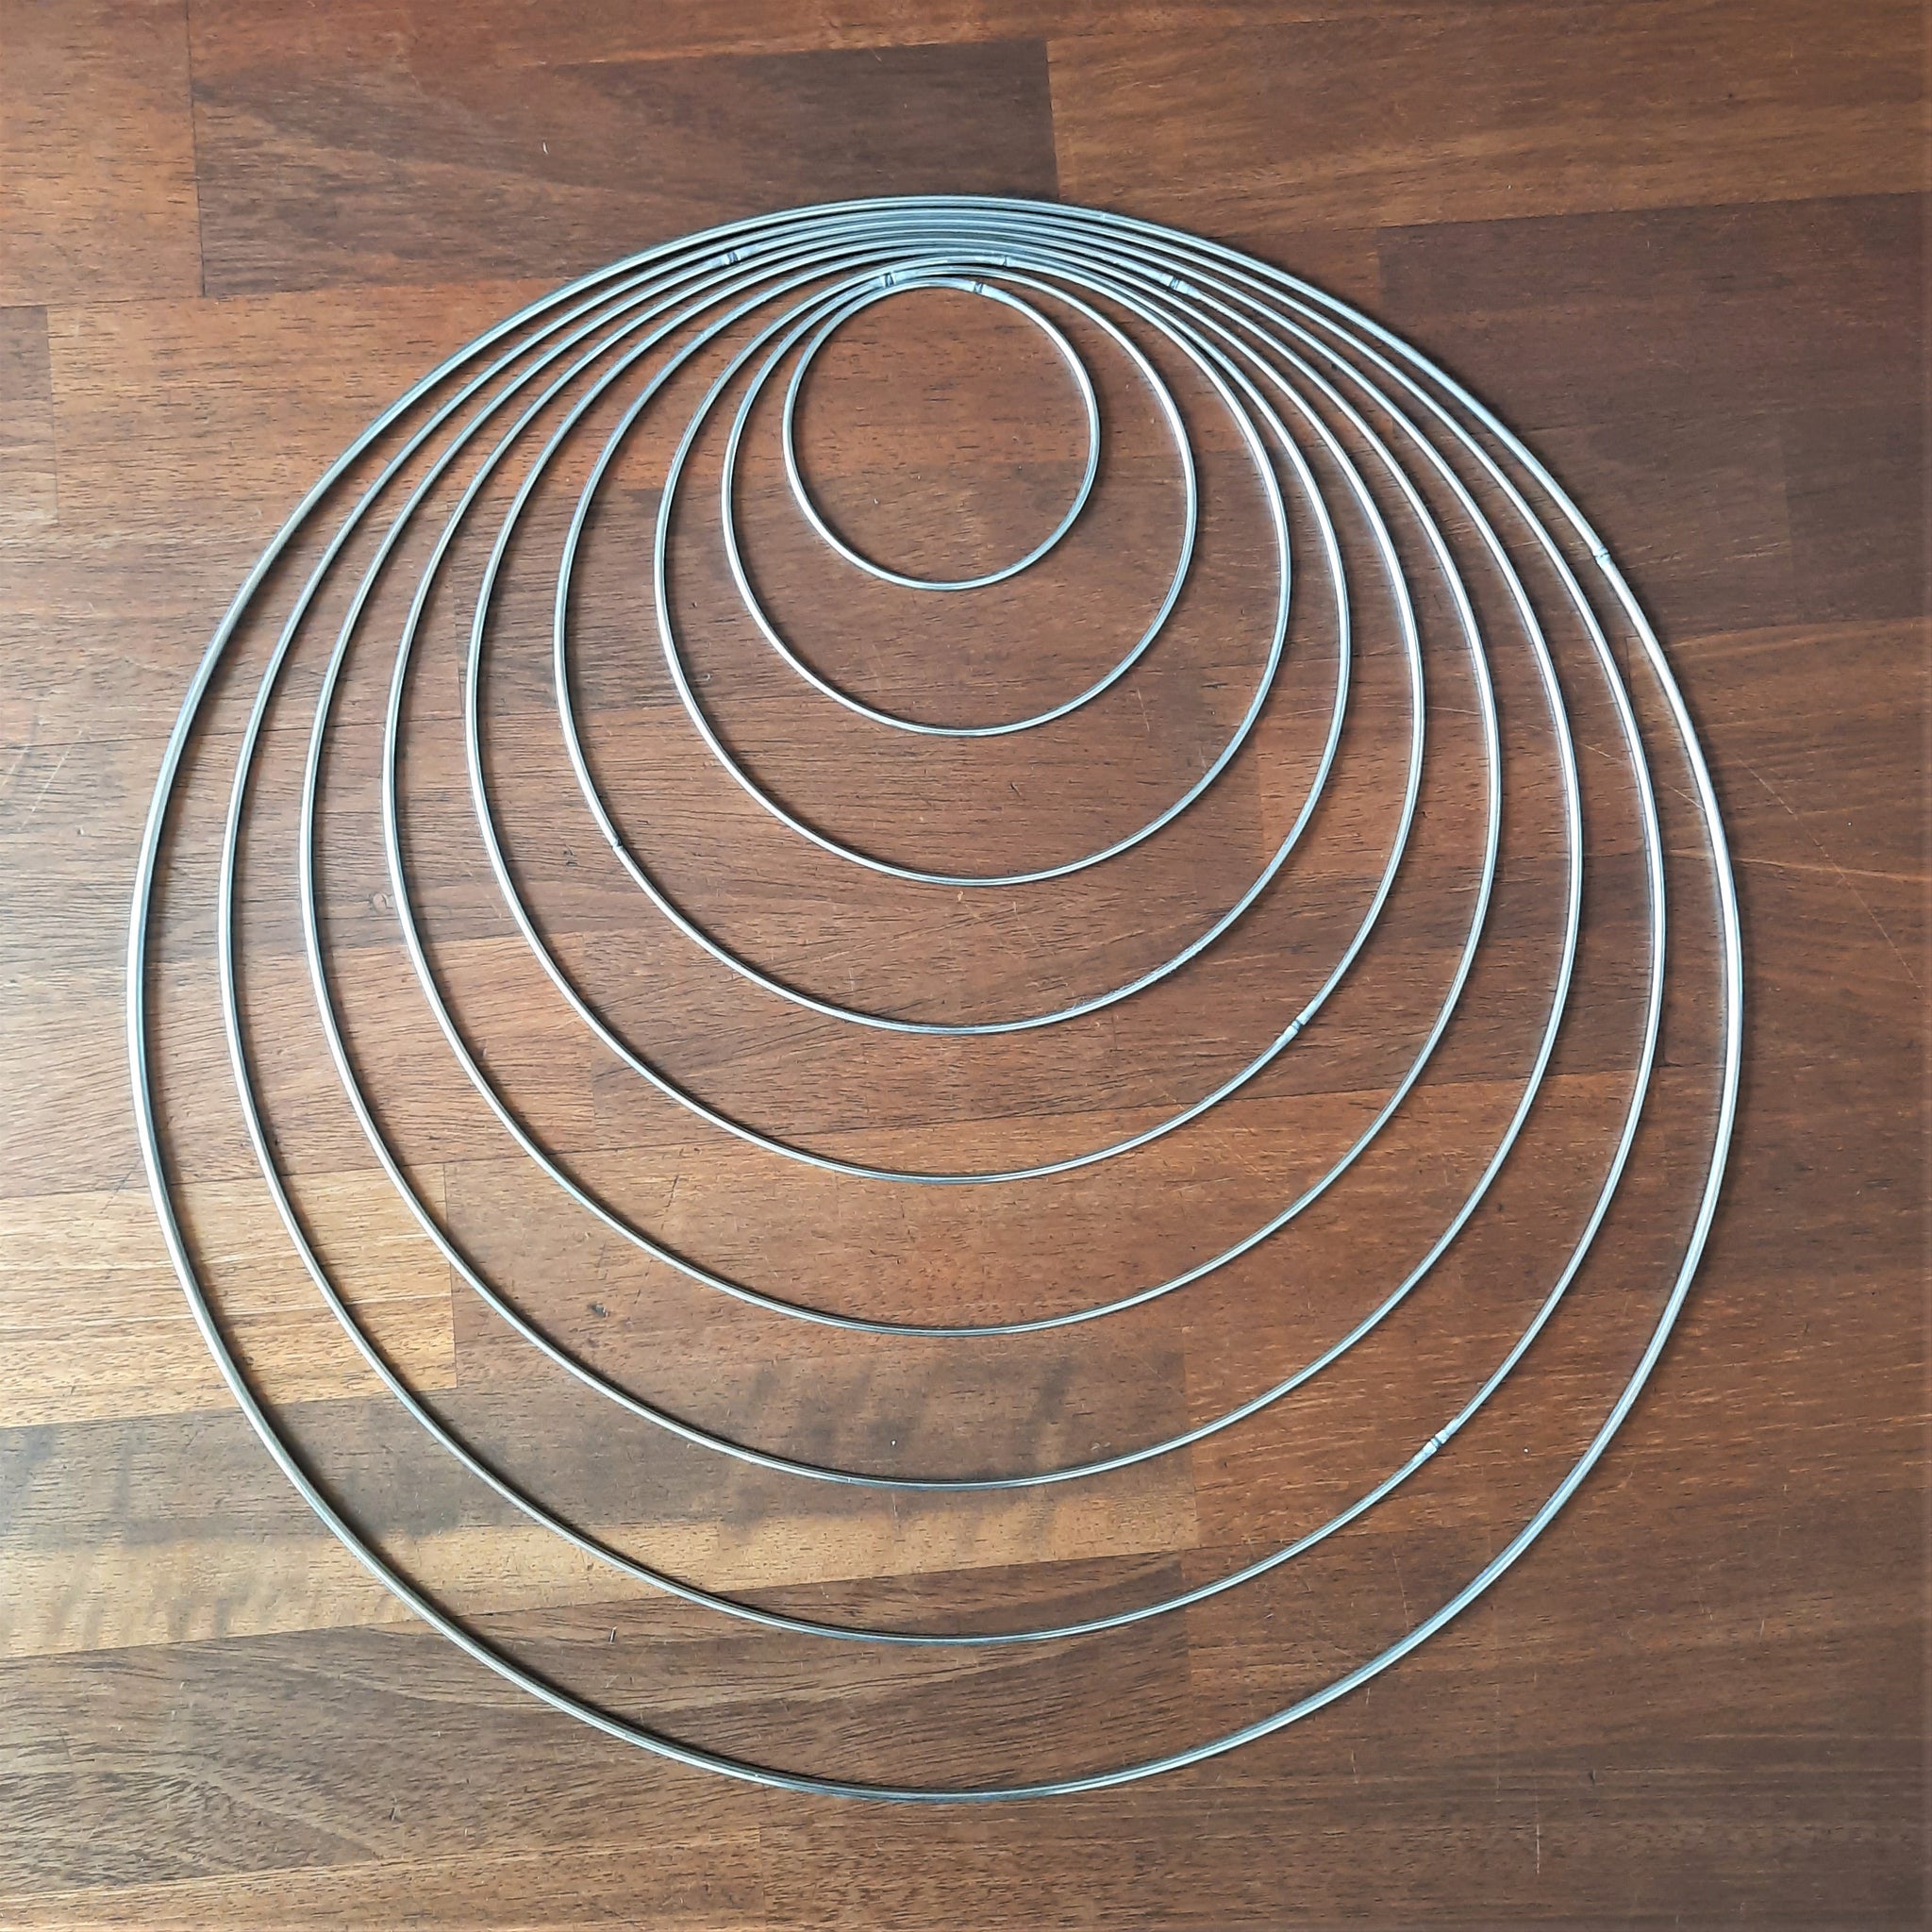 25cm diameter mandala ring - It's all in a nutshell